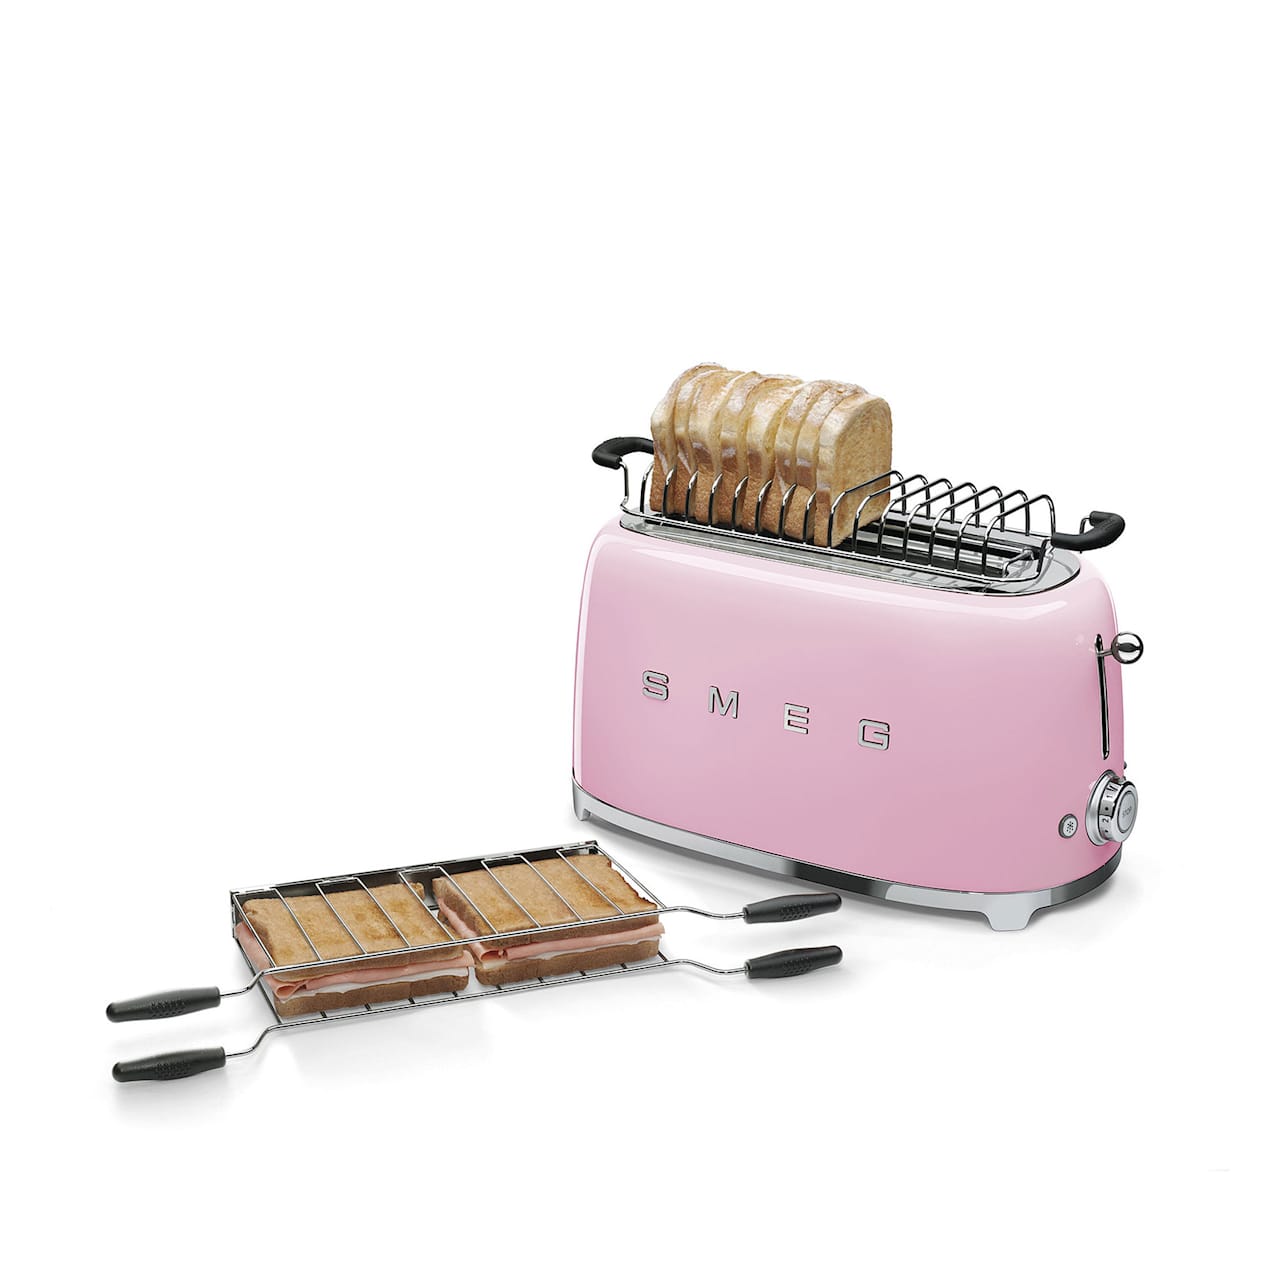 Smeg 4 Slice Toaster Pink